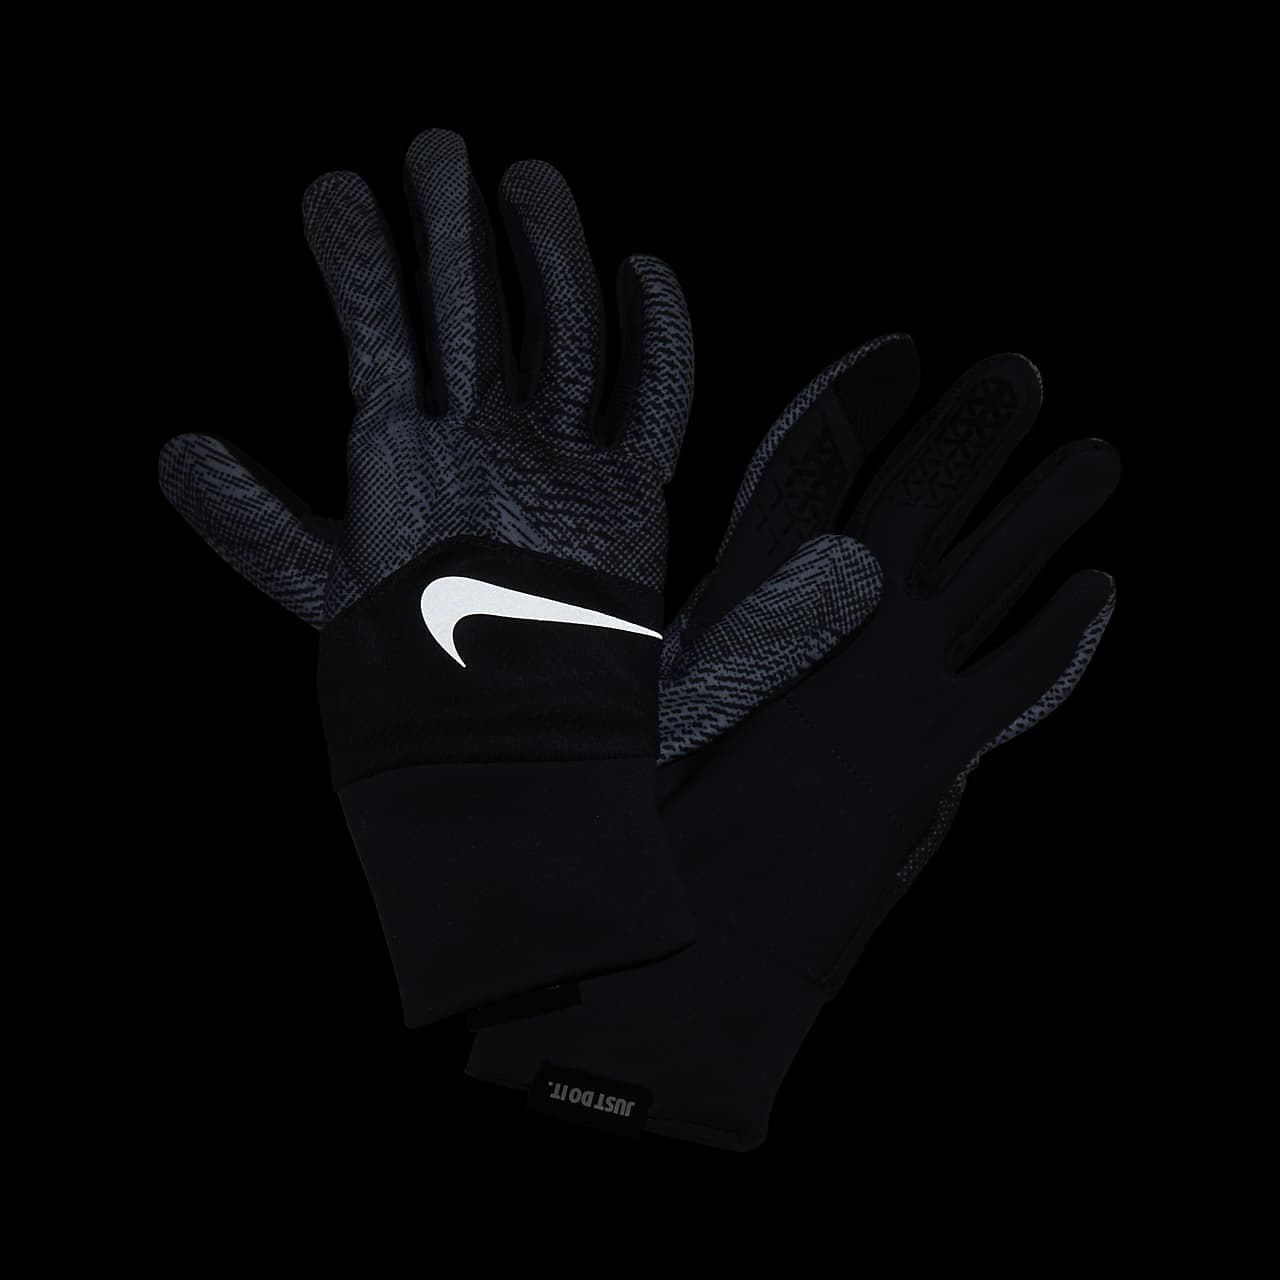 nike reflective gloves